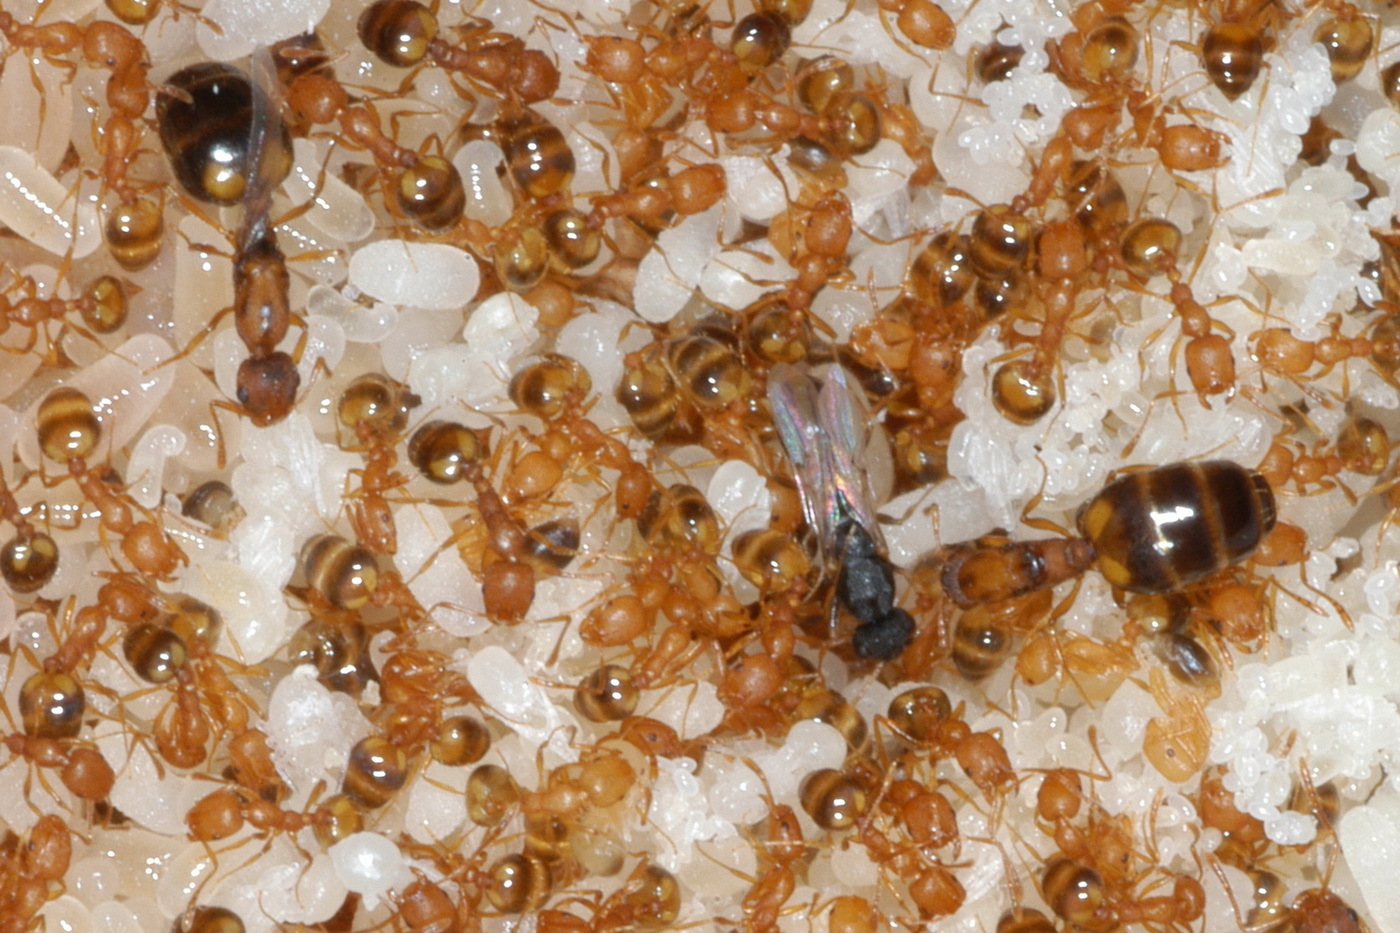 Муравьиная матка рыжих муравьев